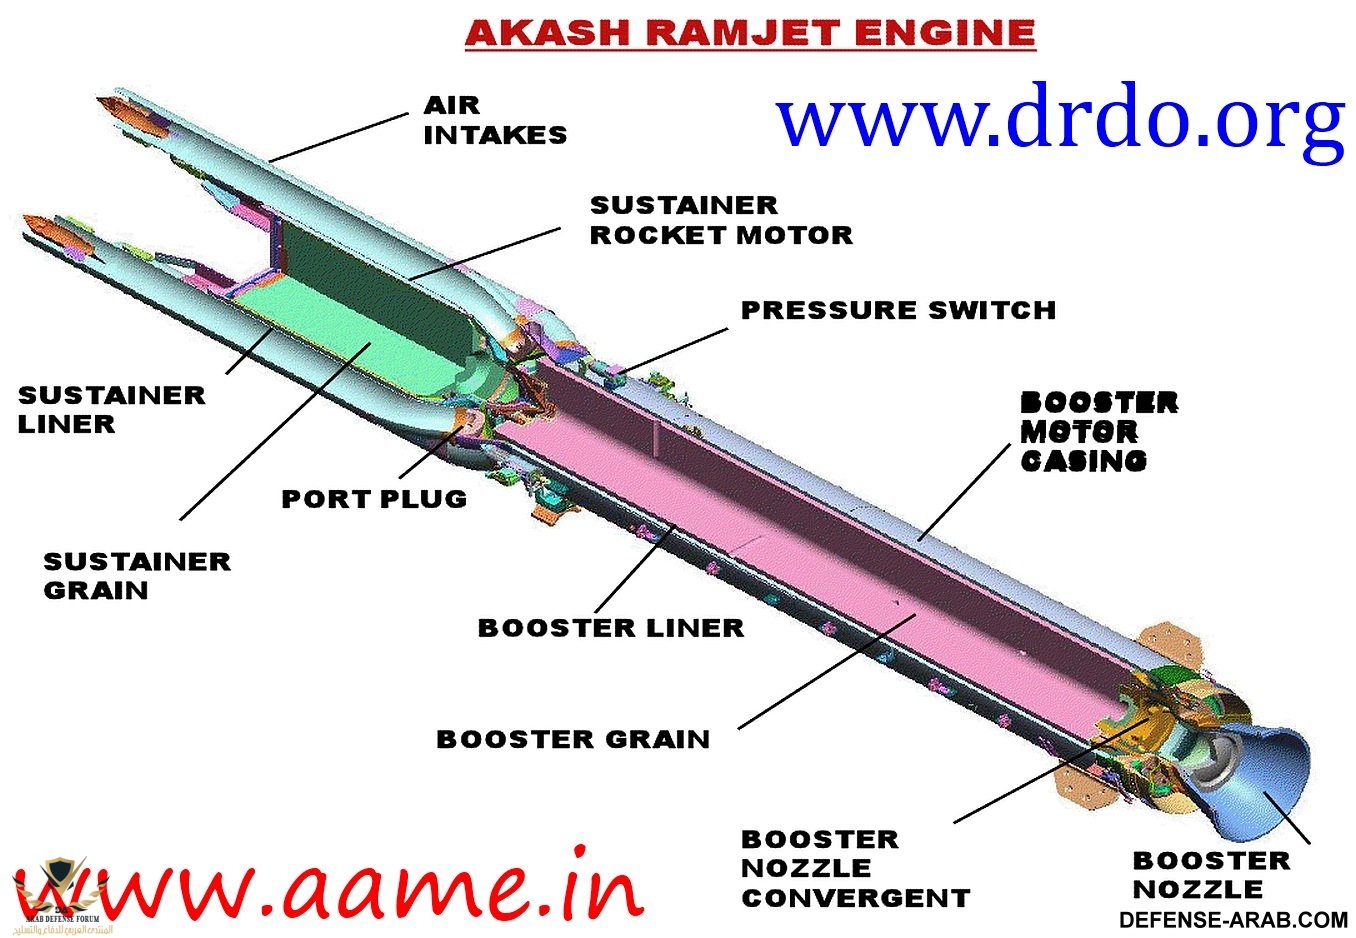 Akash-Missile-Ramjet-Engine-Cut-Section-01.jpg